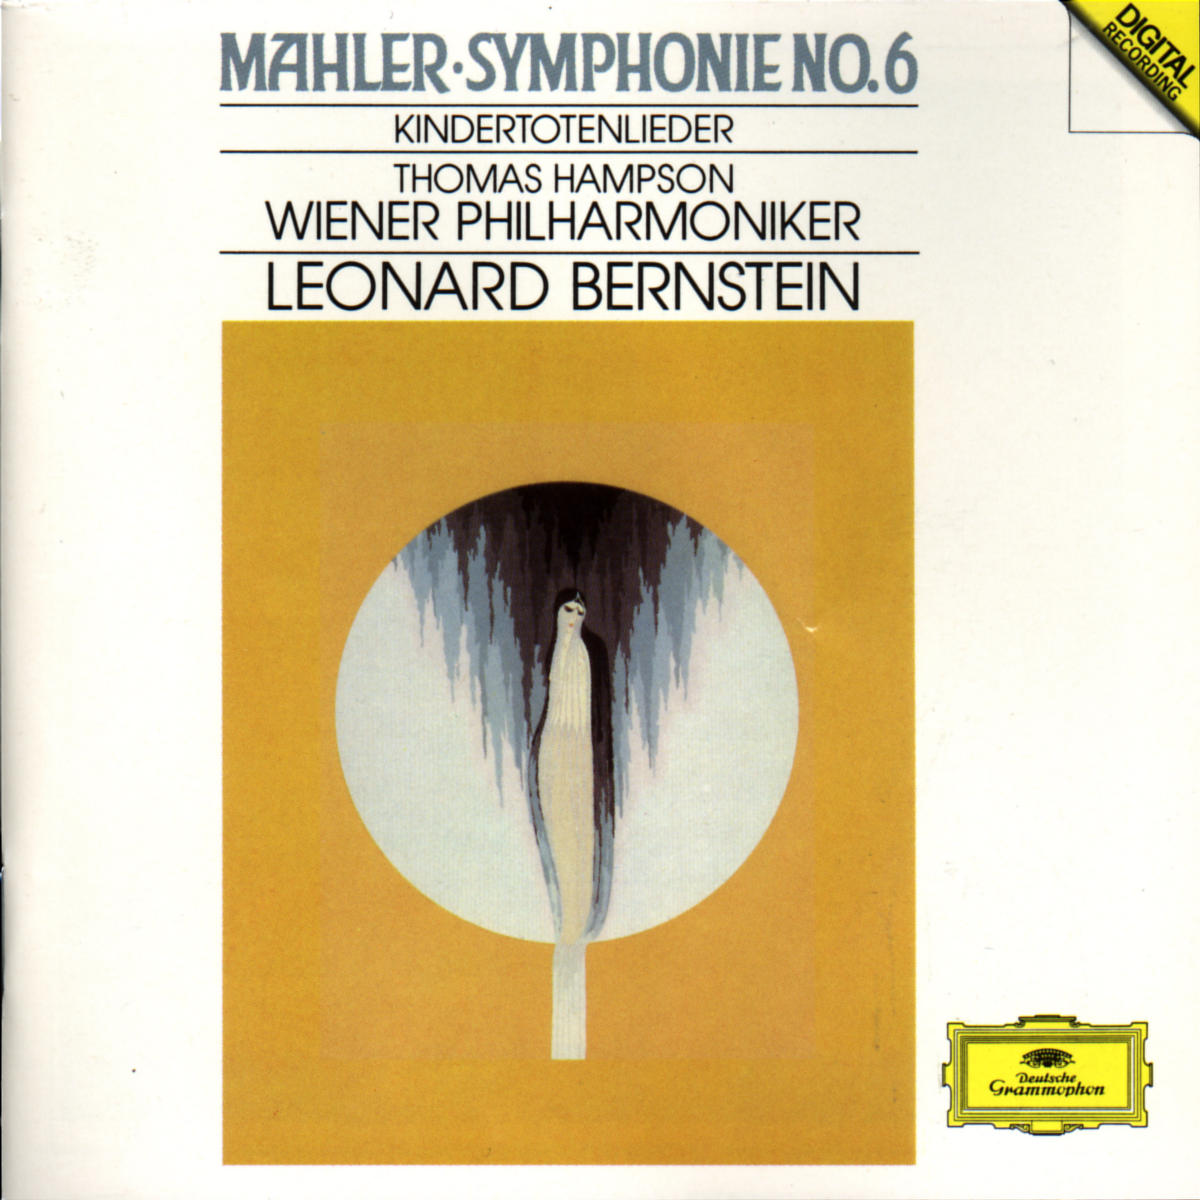 Product Family | MAHLER Symphonie No. 6 Bernstein